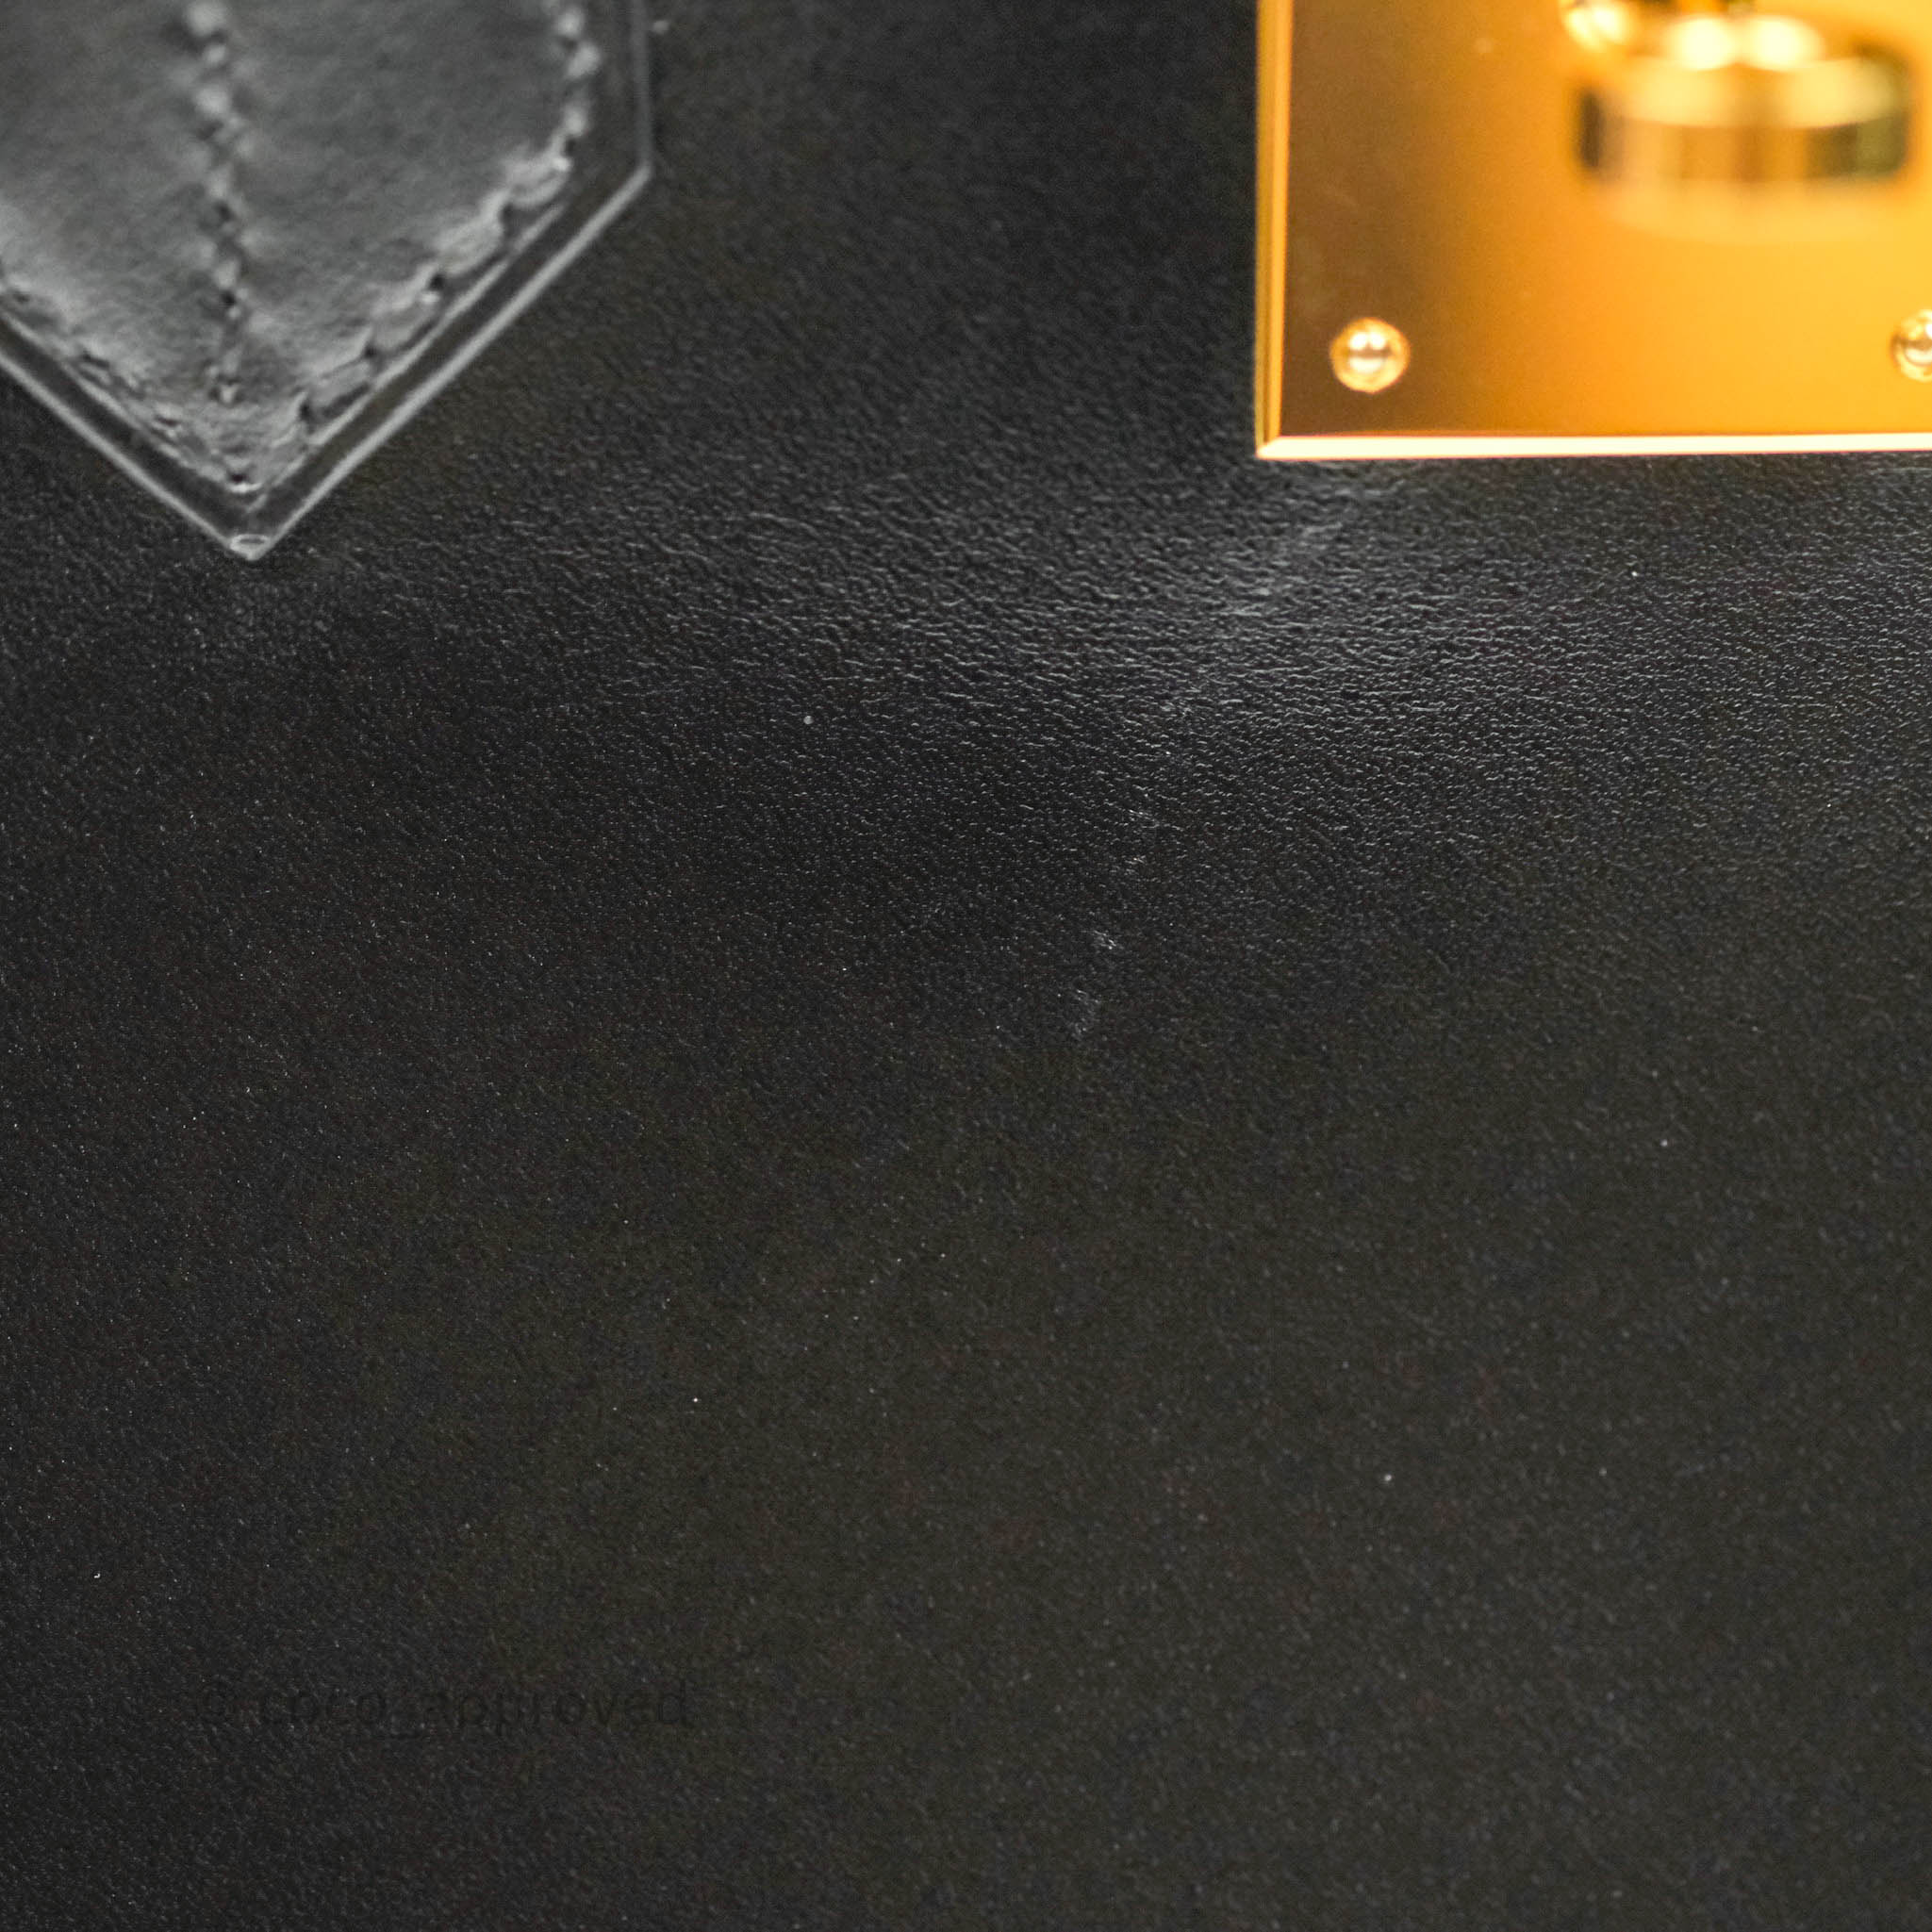 Hermès Birkin 30 Black Box Calfskin Gold Hardware – Coco Approved Studio